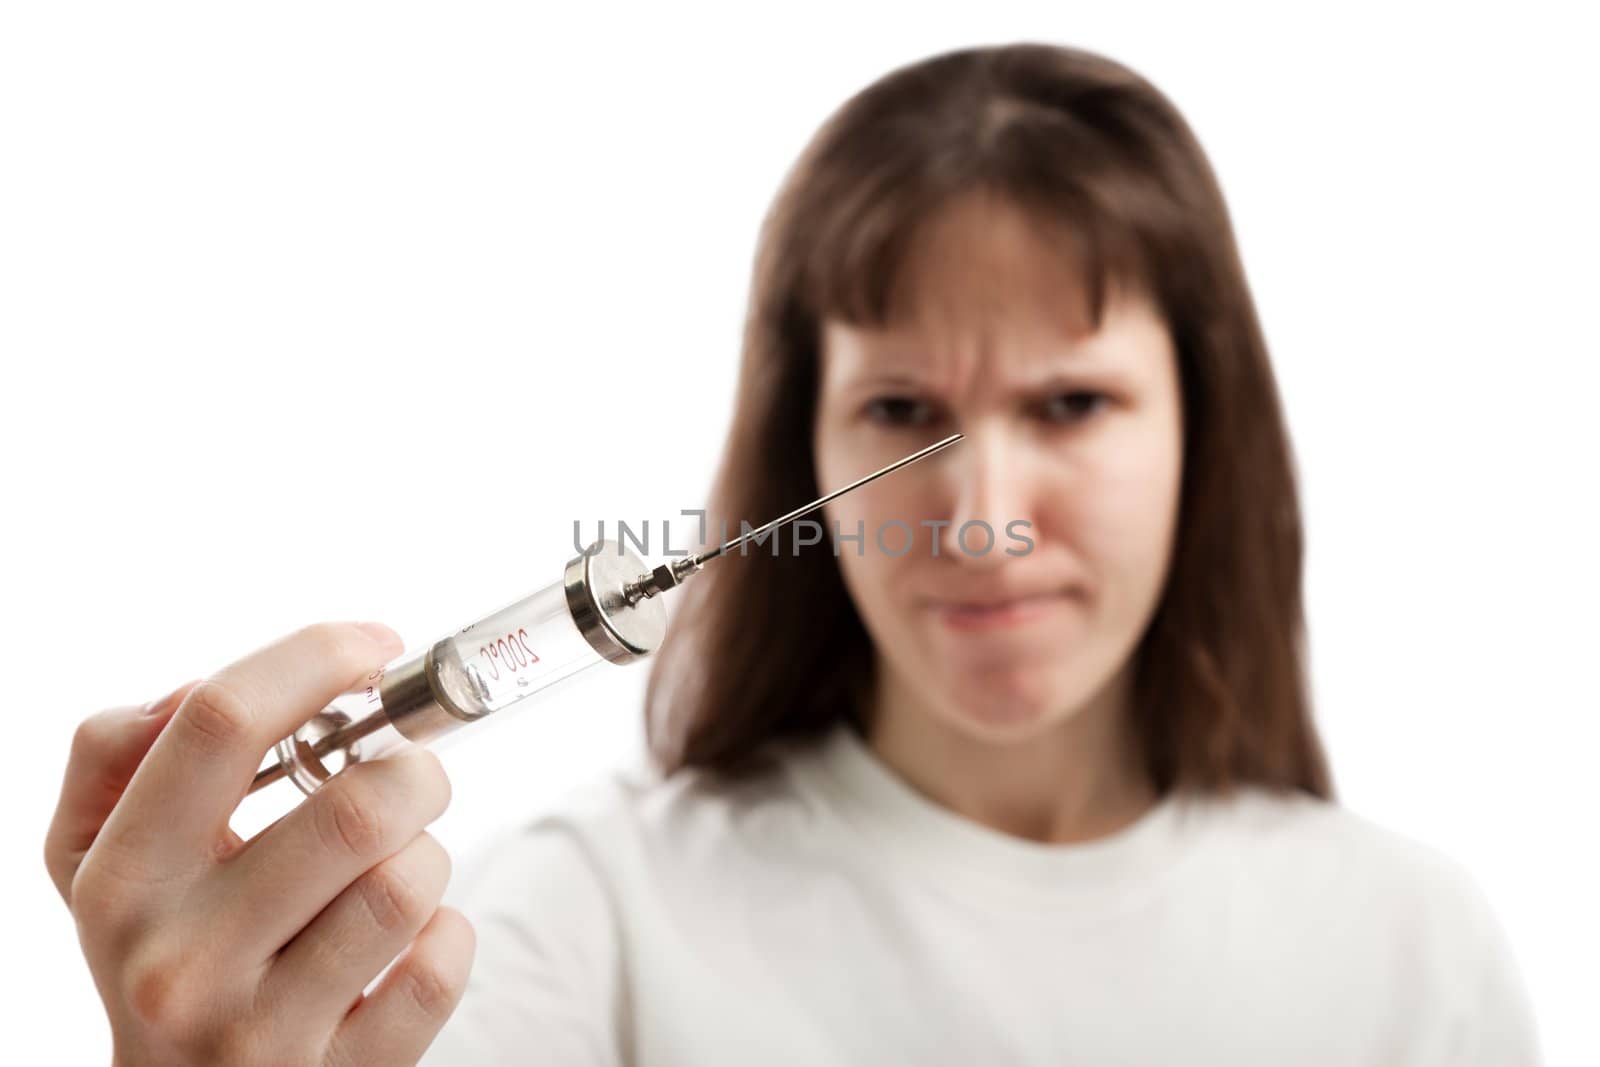 Hand holding medicine healthcare injecting syringe